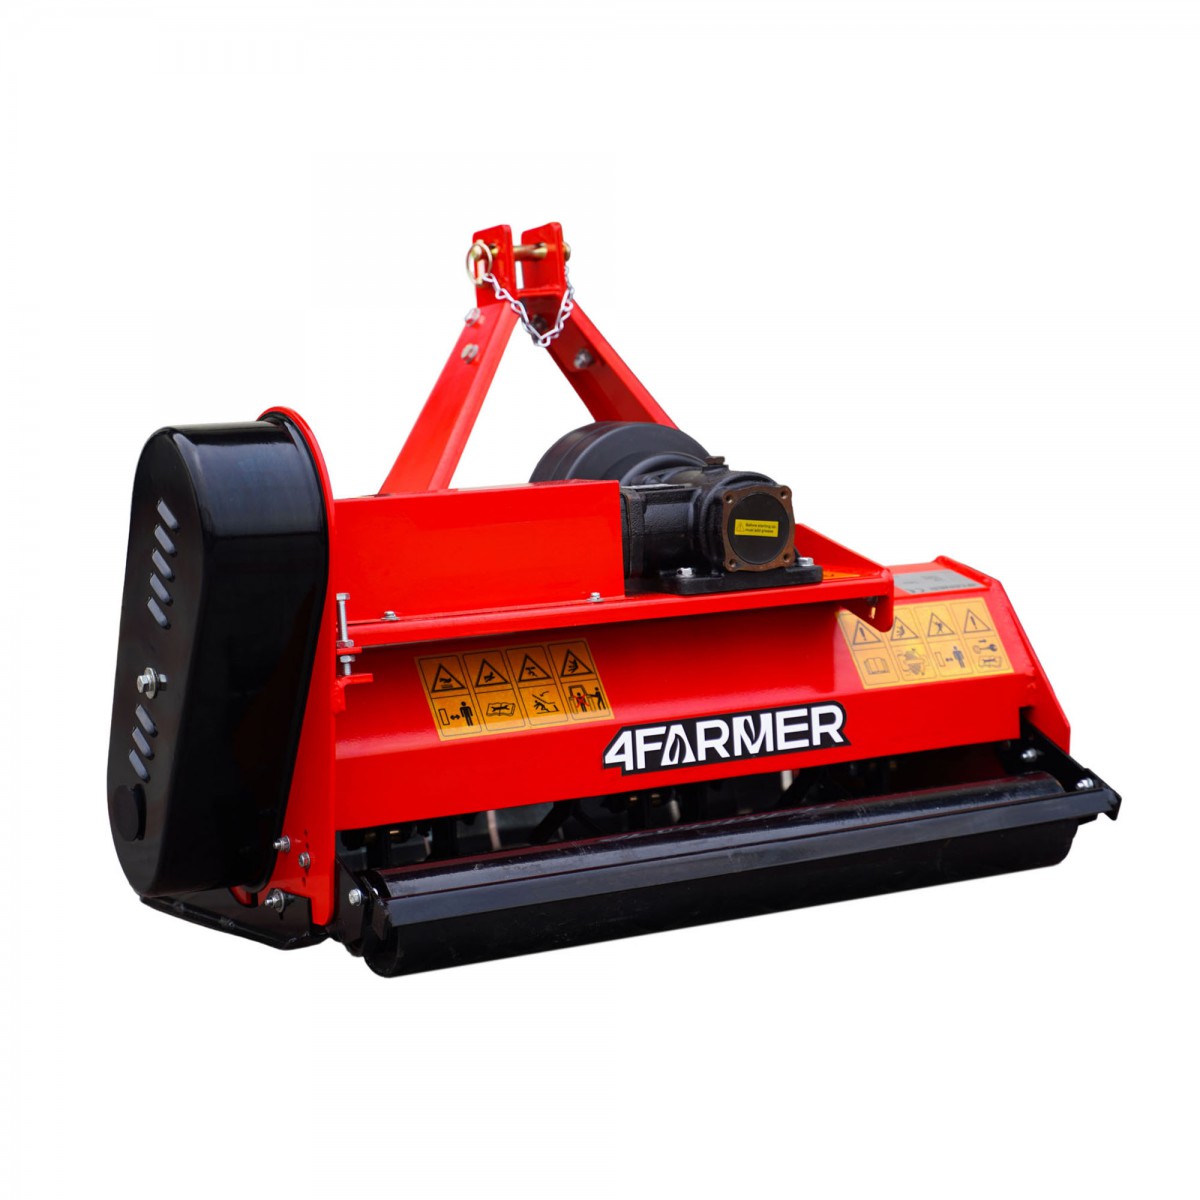 Flail mower EF 95 4FARMER - red